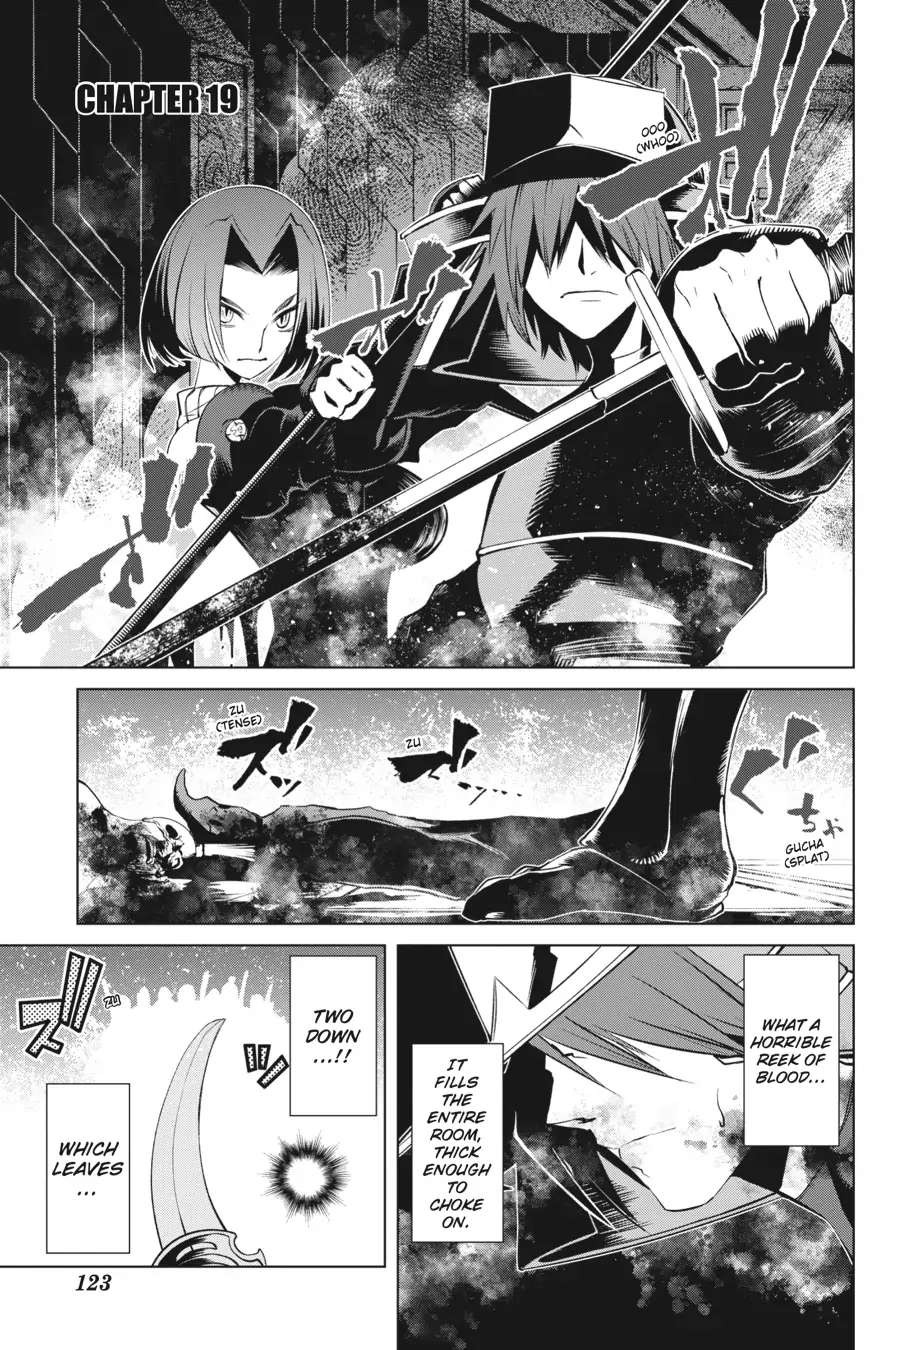 Goblin Slayer Gaiden 2: Tsubanari No Daikatana - Page 1